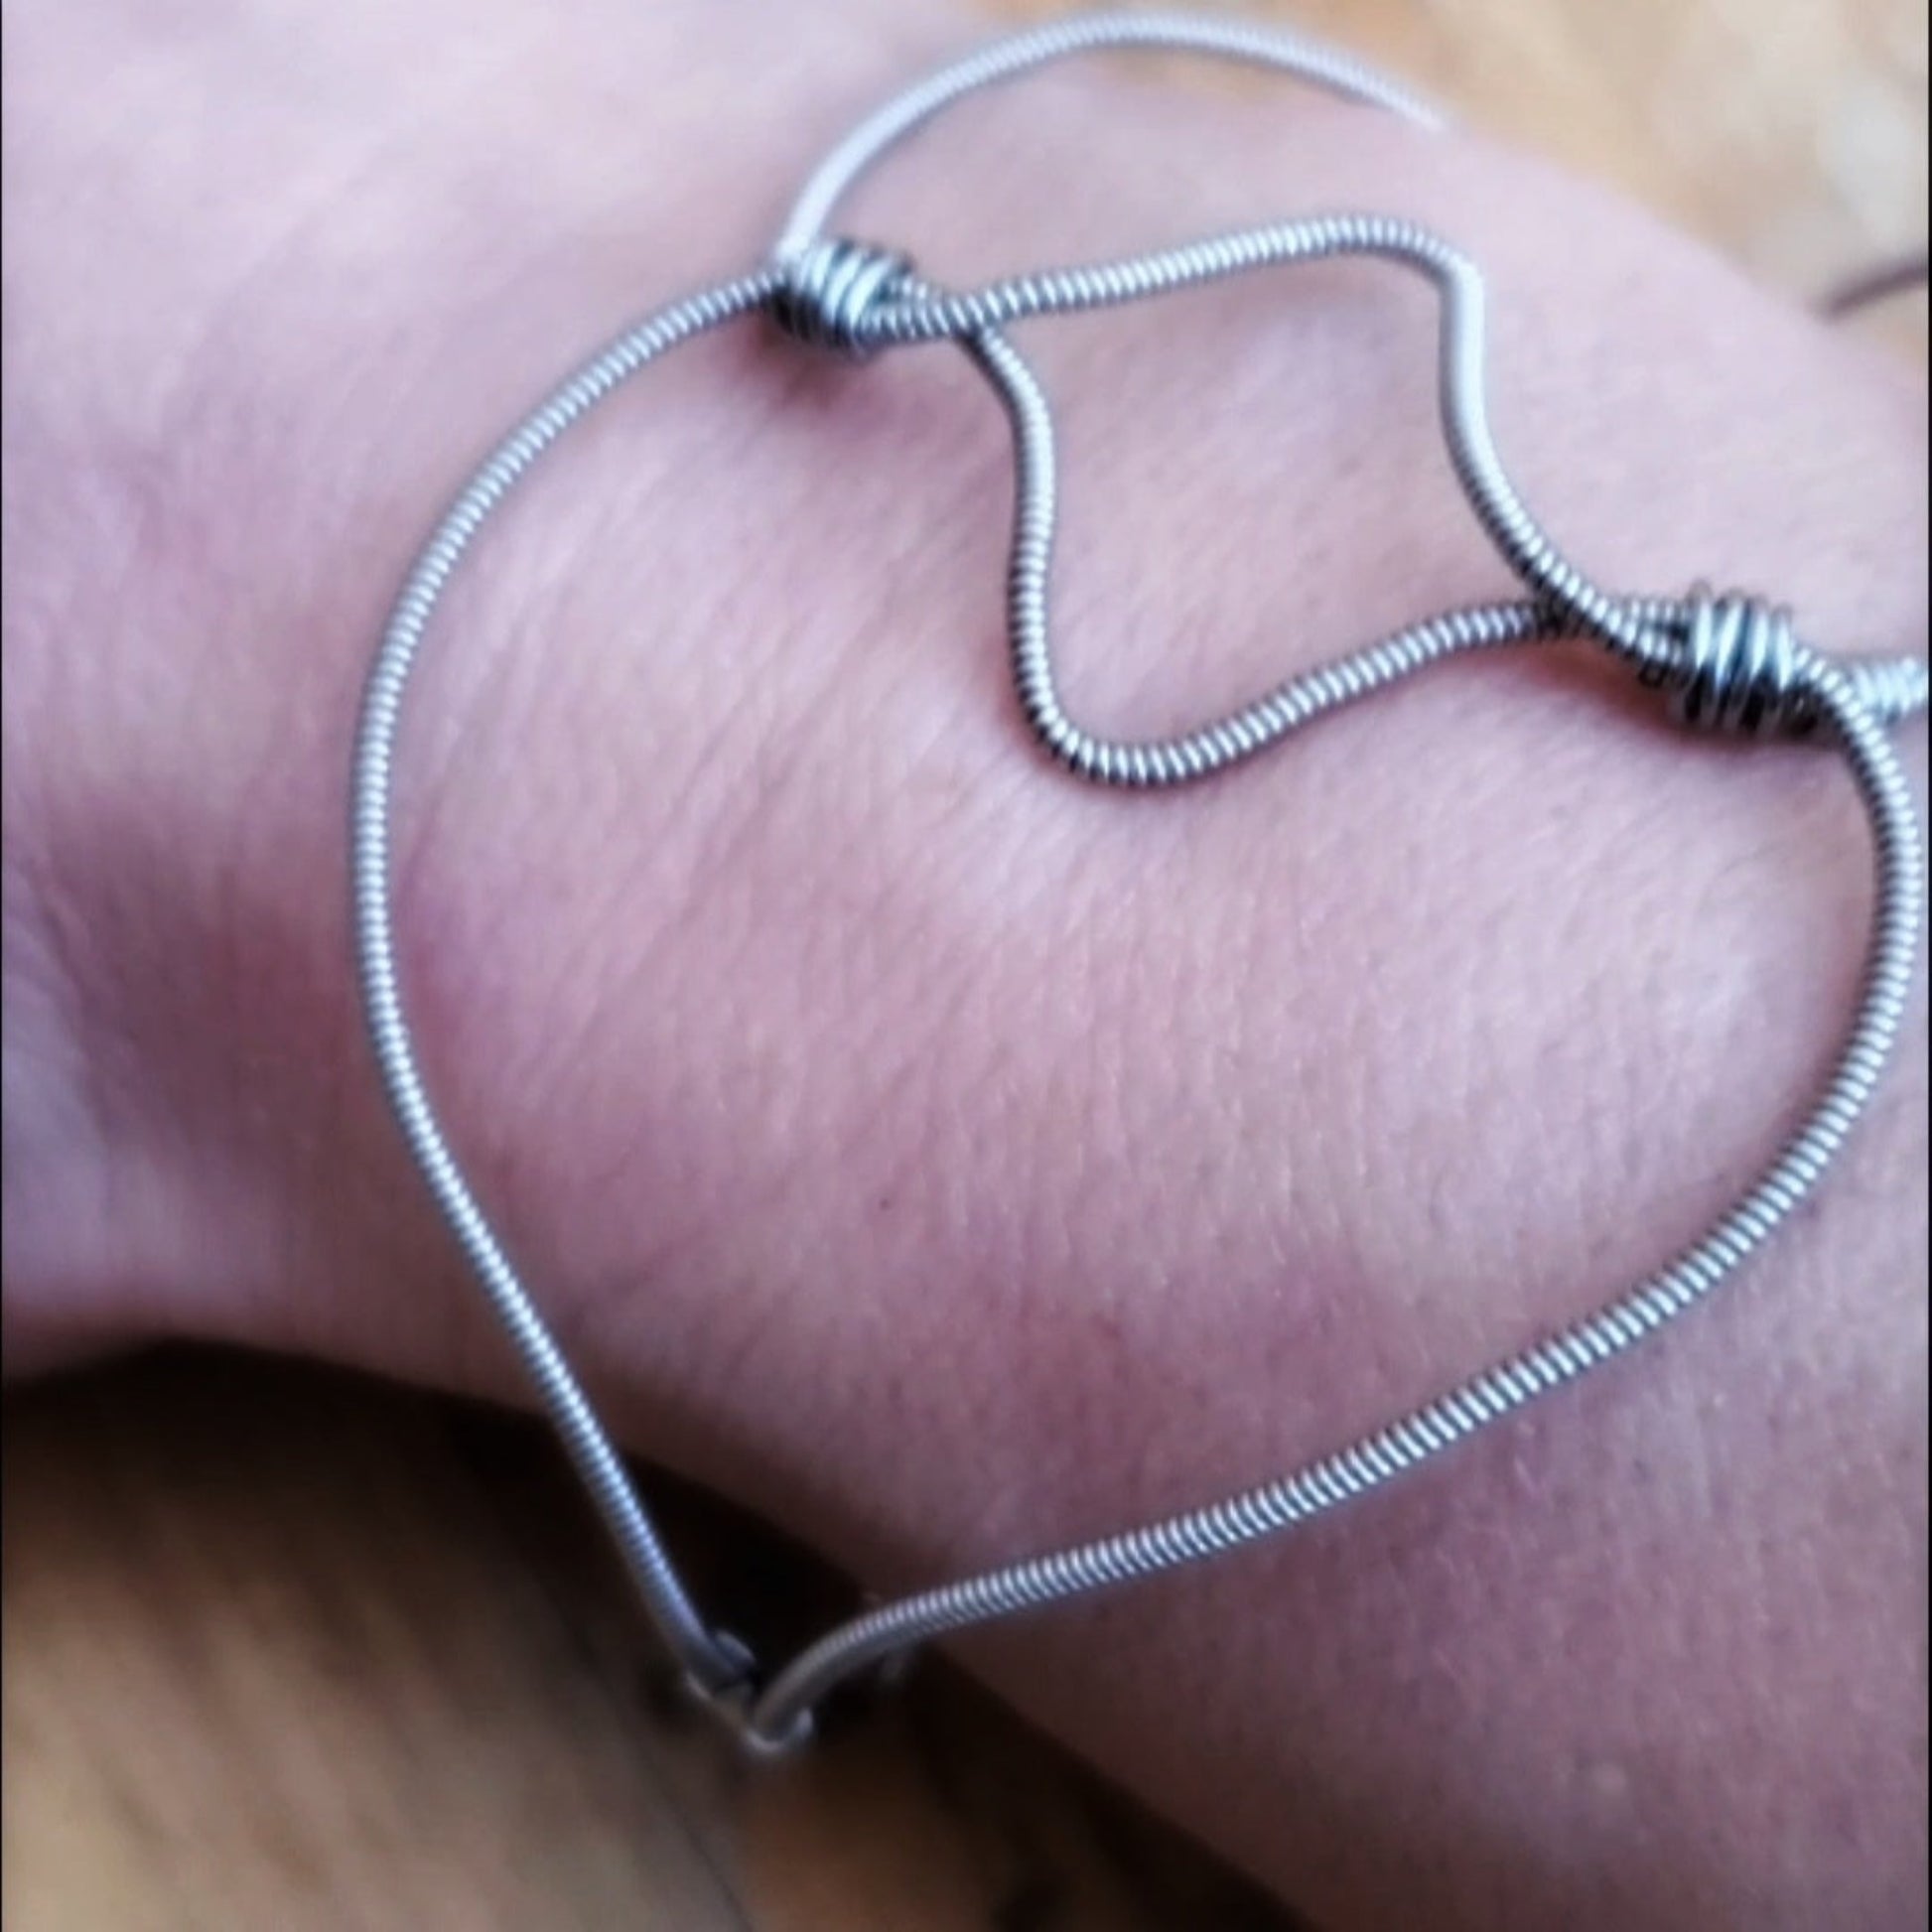 guitar string bracelet in the shape of a heart, on a wrist